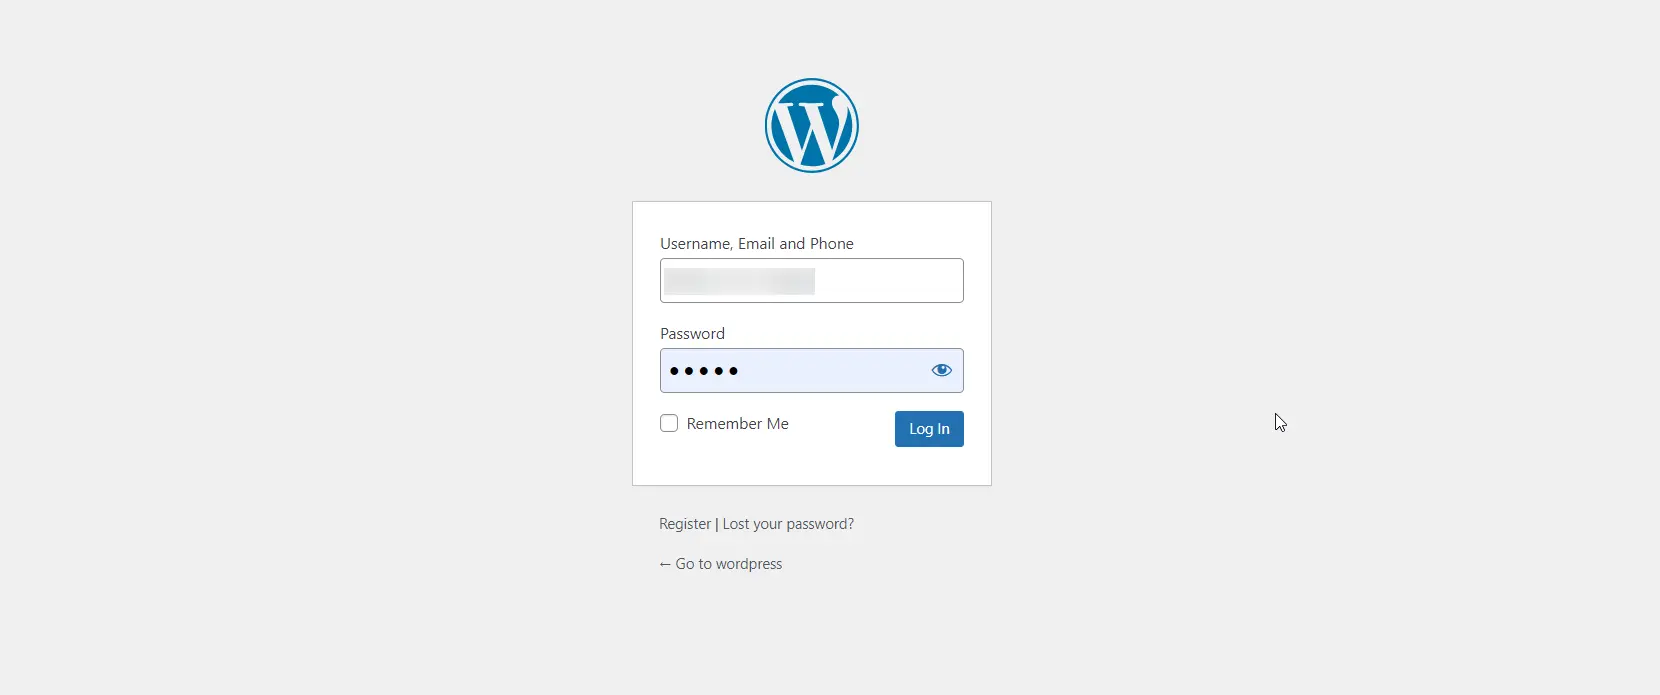 WordPress default login with OTP Verification - click log in